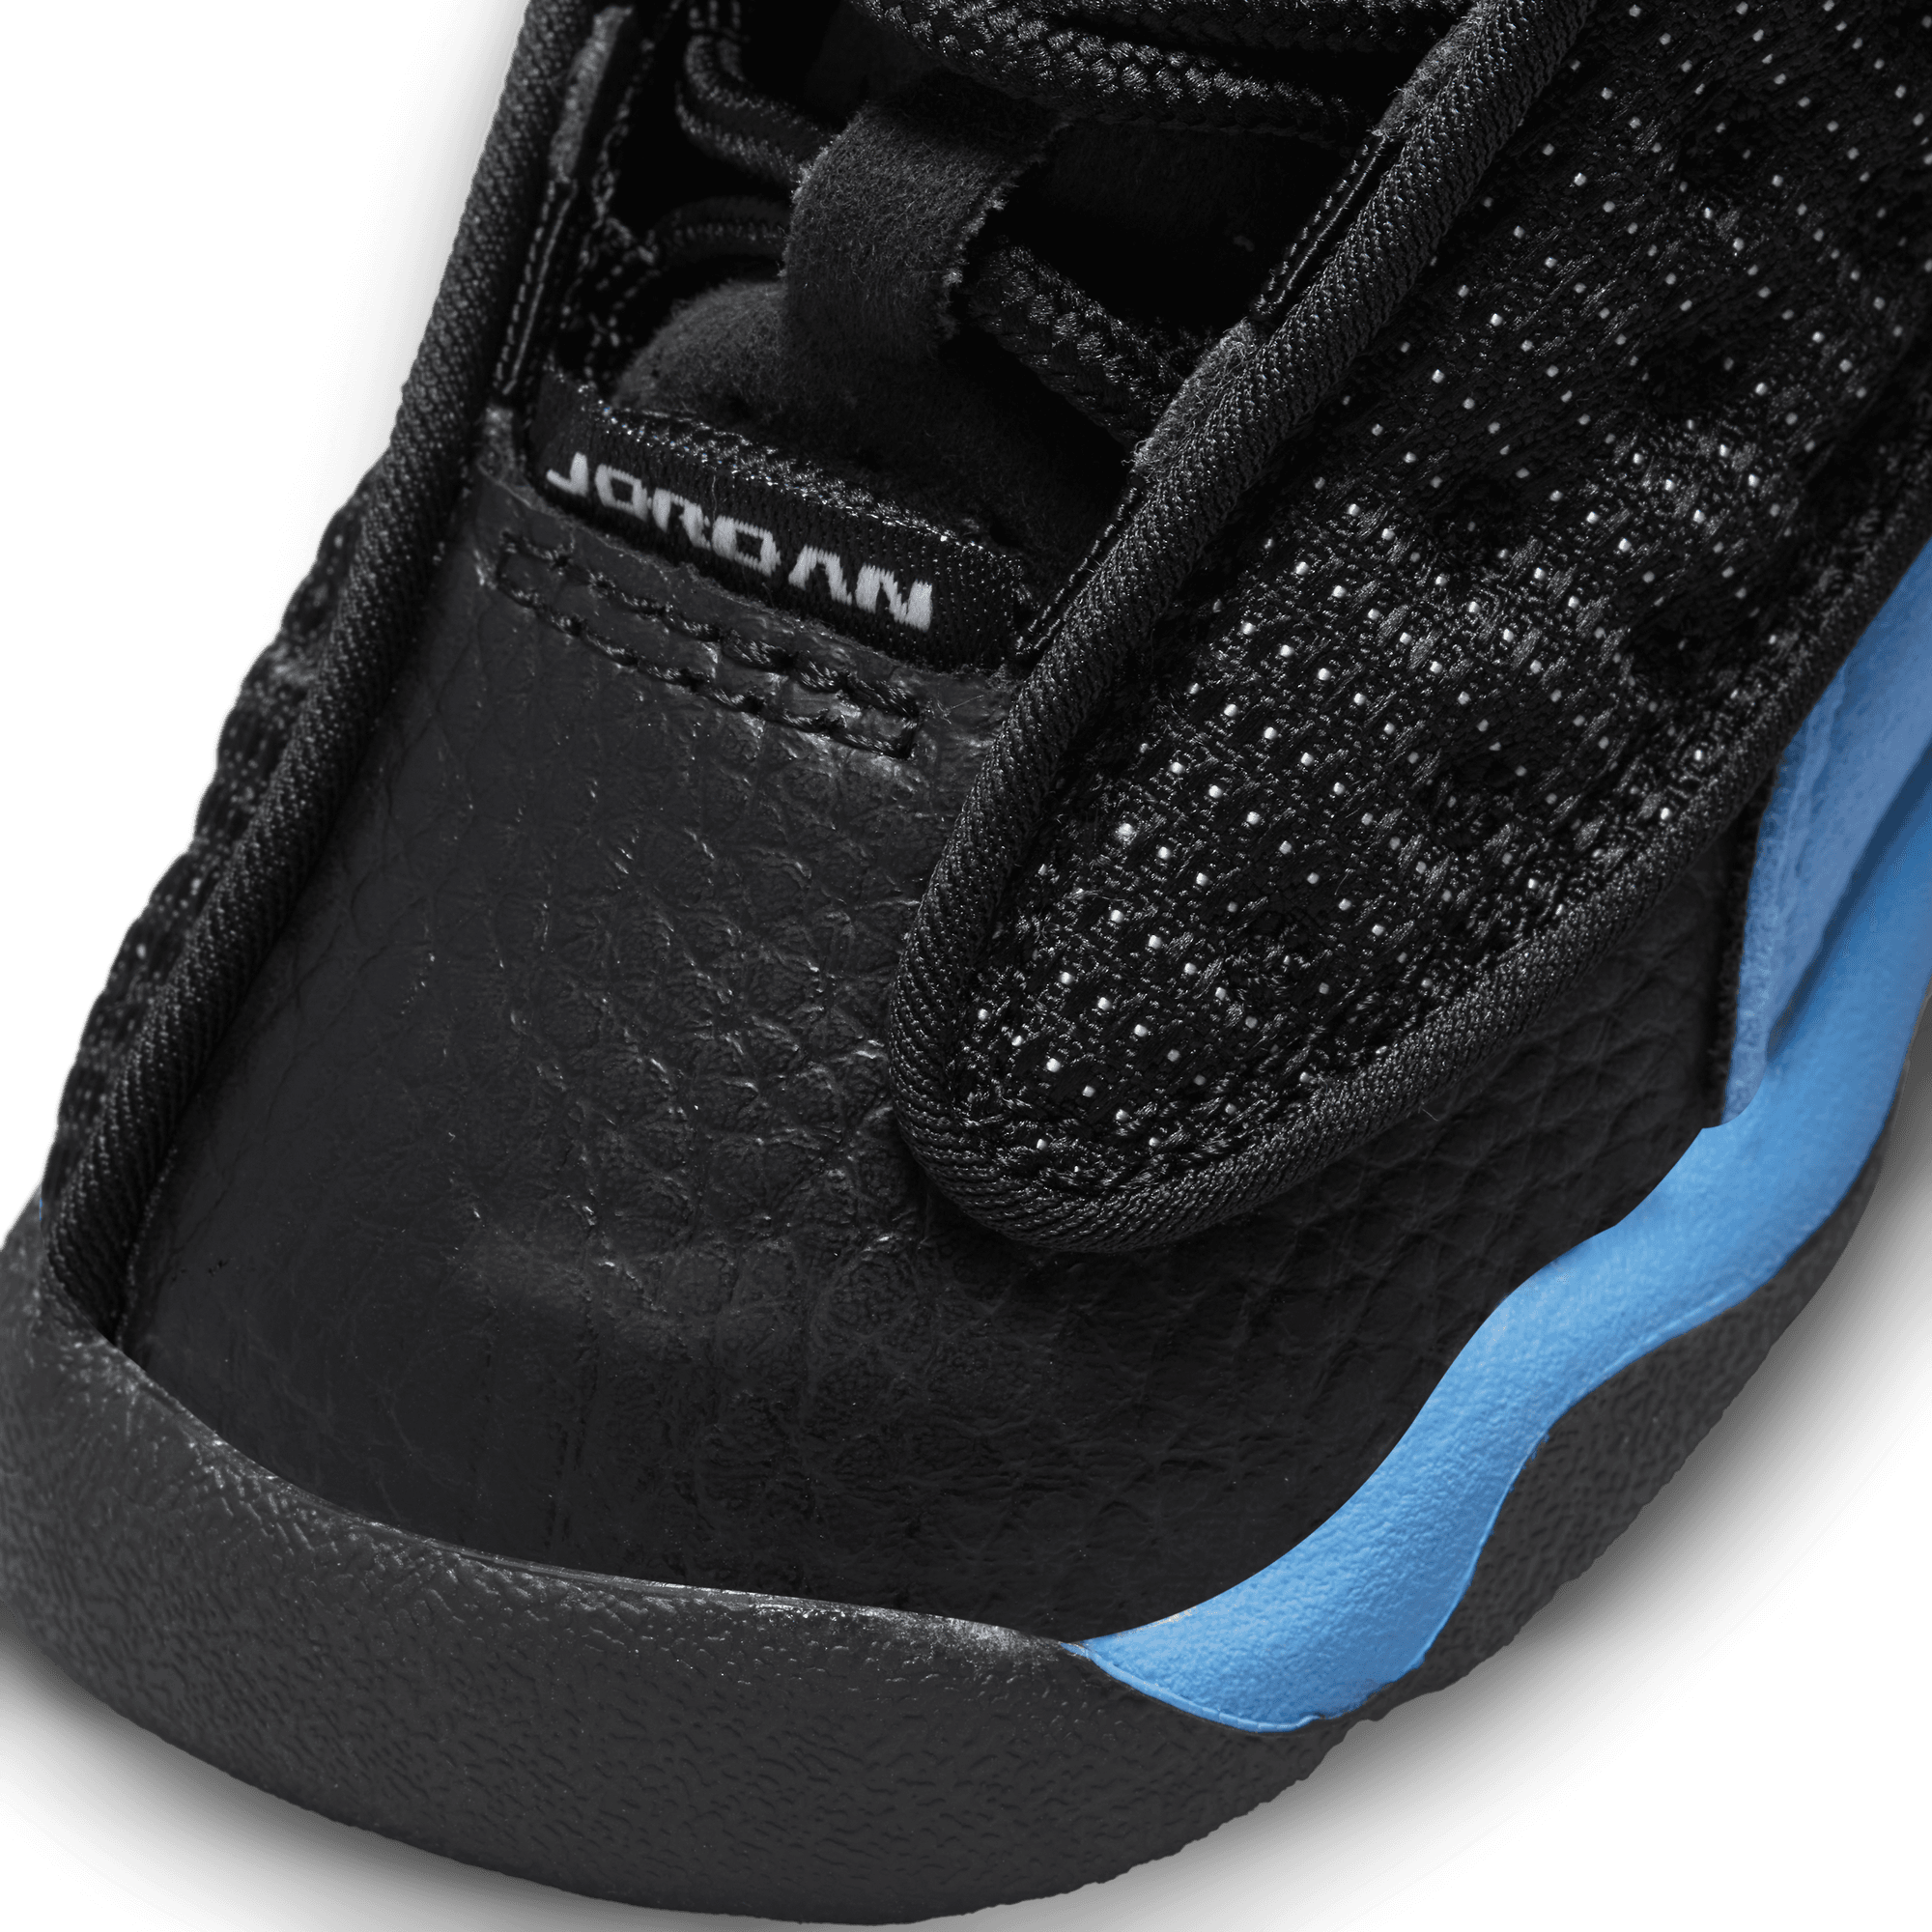 Air Jordan 13 Retro 'Black University Blue